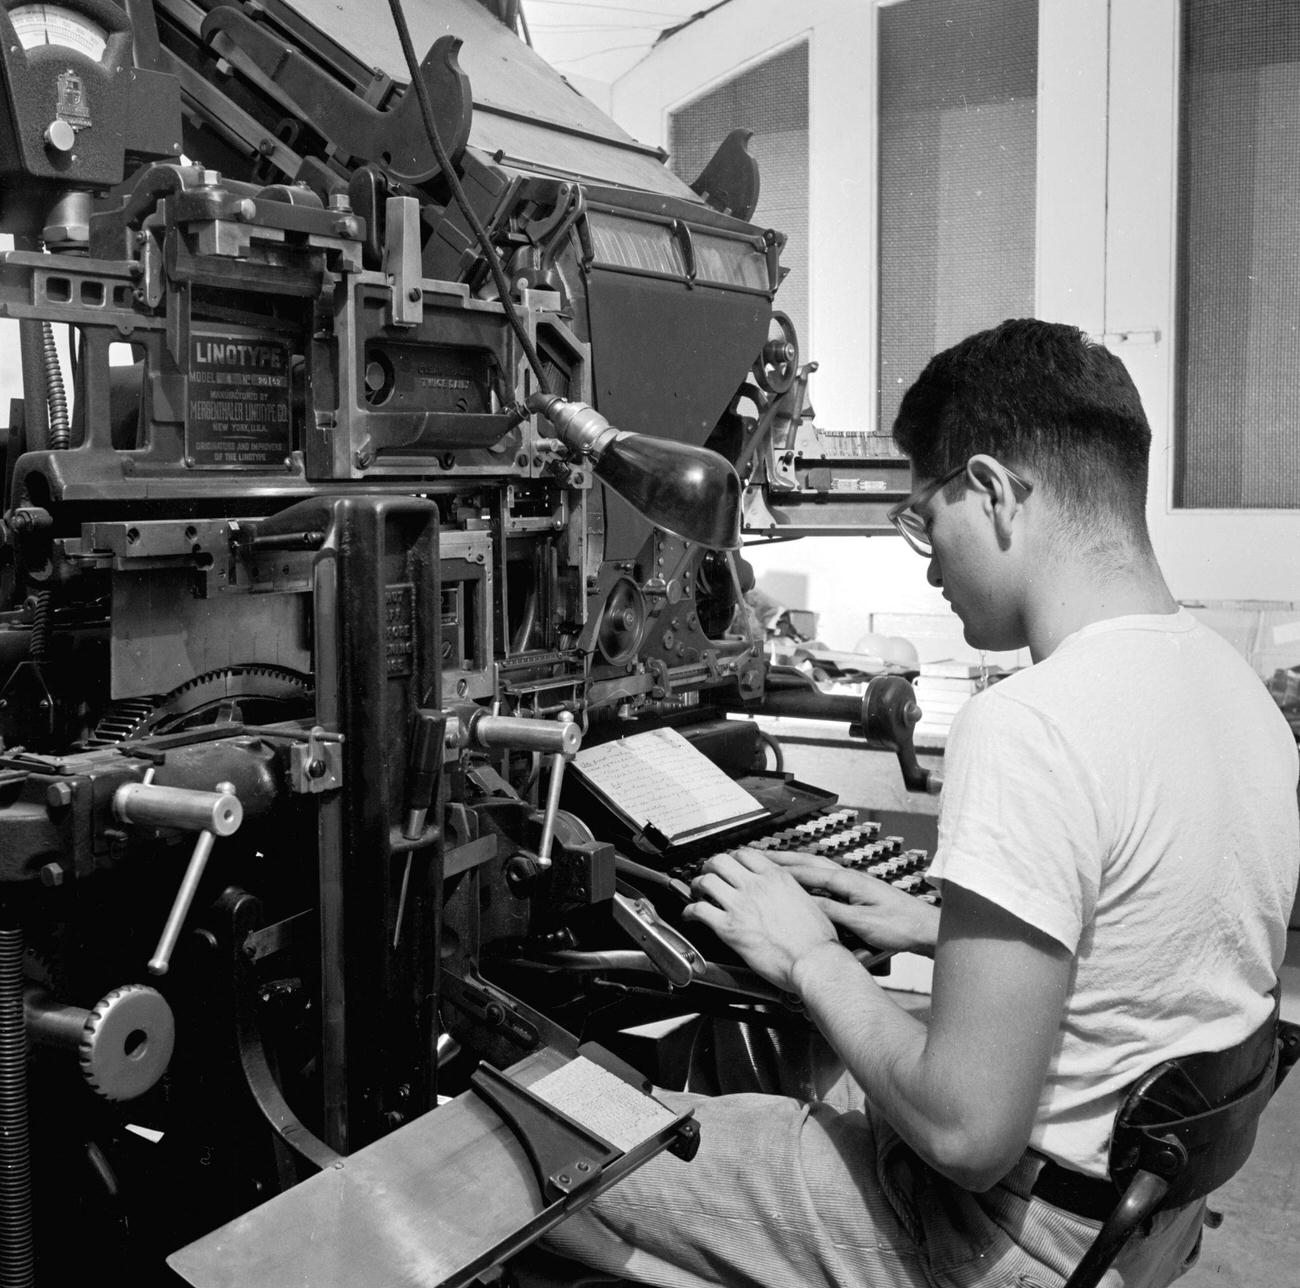 Student Working on a Linotype Machine, Gallaudet College, 1940